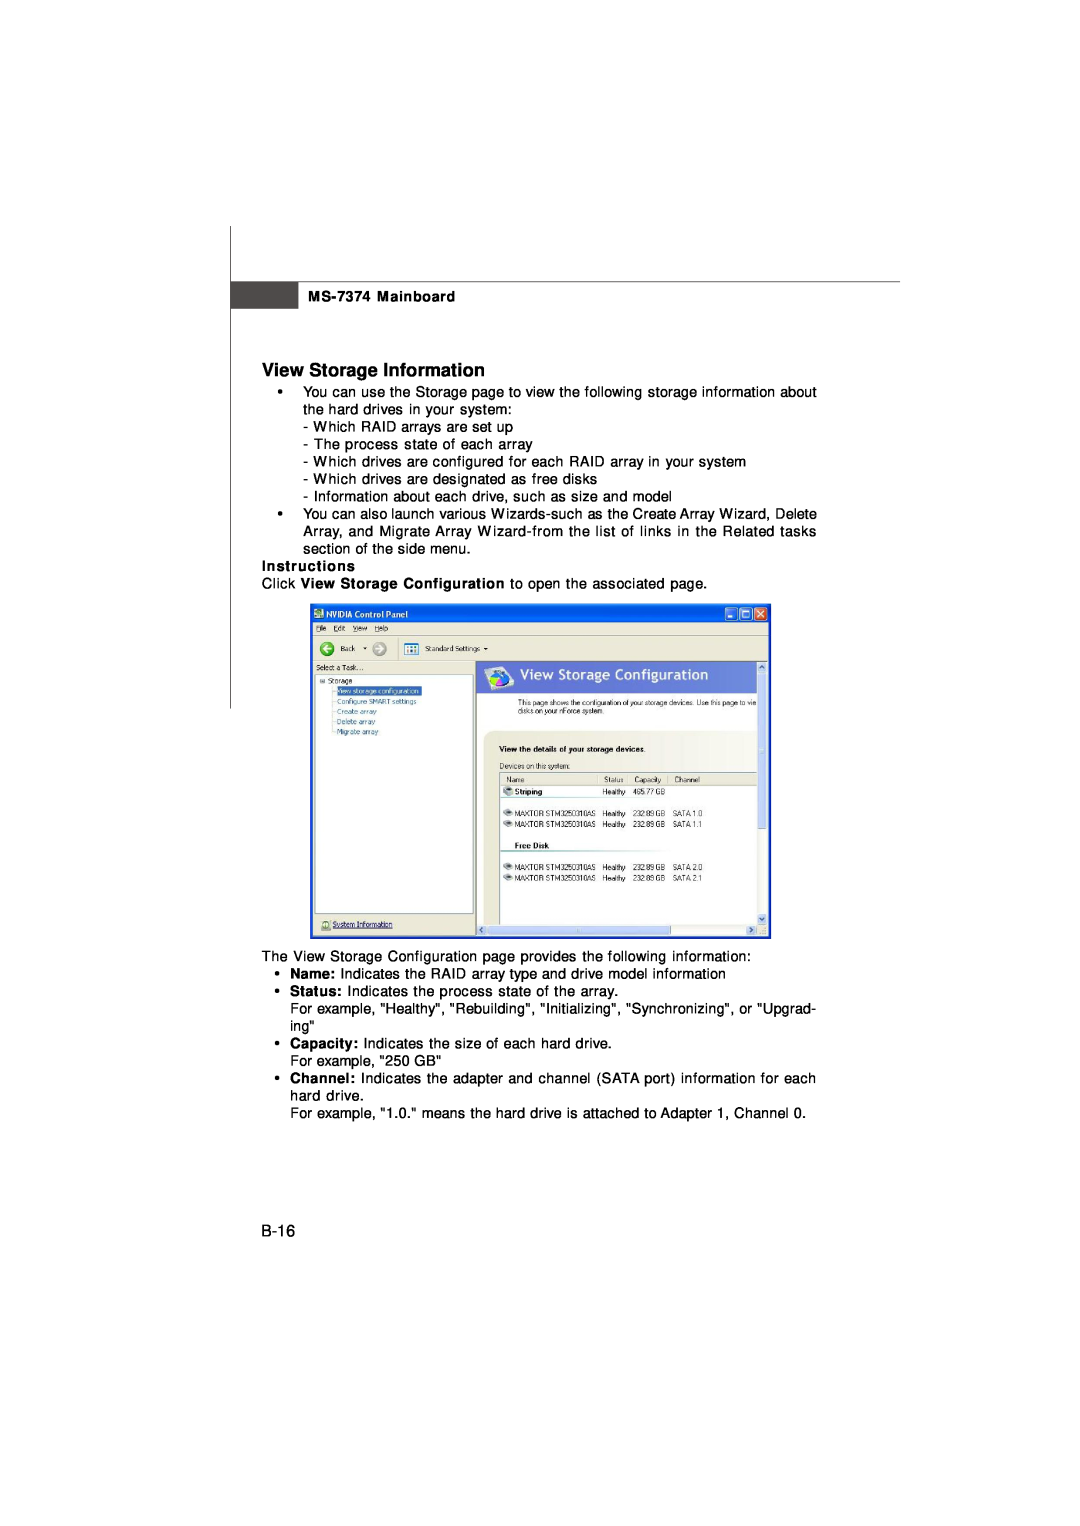 Nvidia manual View Storage Information, B-16, MS-7374 Mainboard, Instructions 